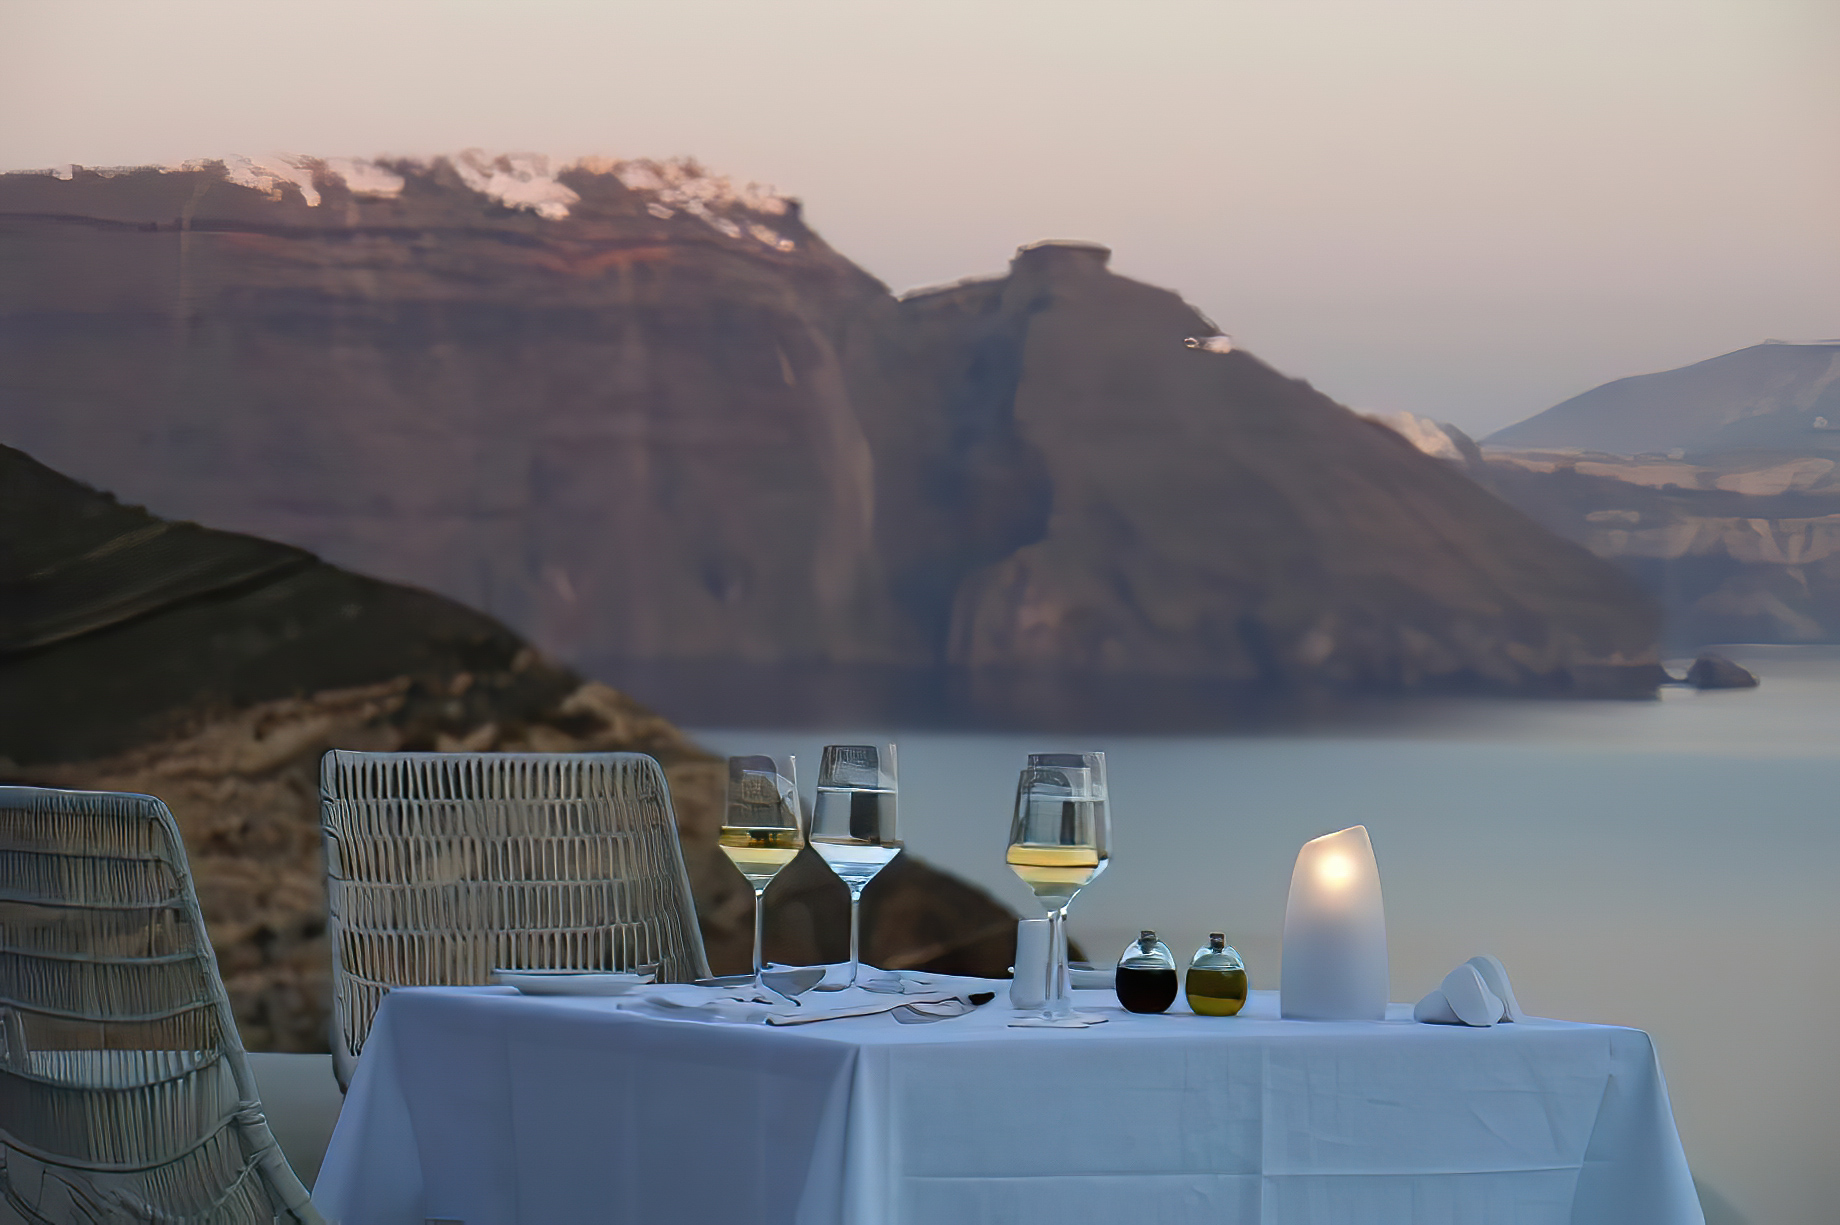 Mystique Hotel Santorini – Oia, Santorini Island, Greece – Cliffside Restaurant Table Sea View